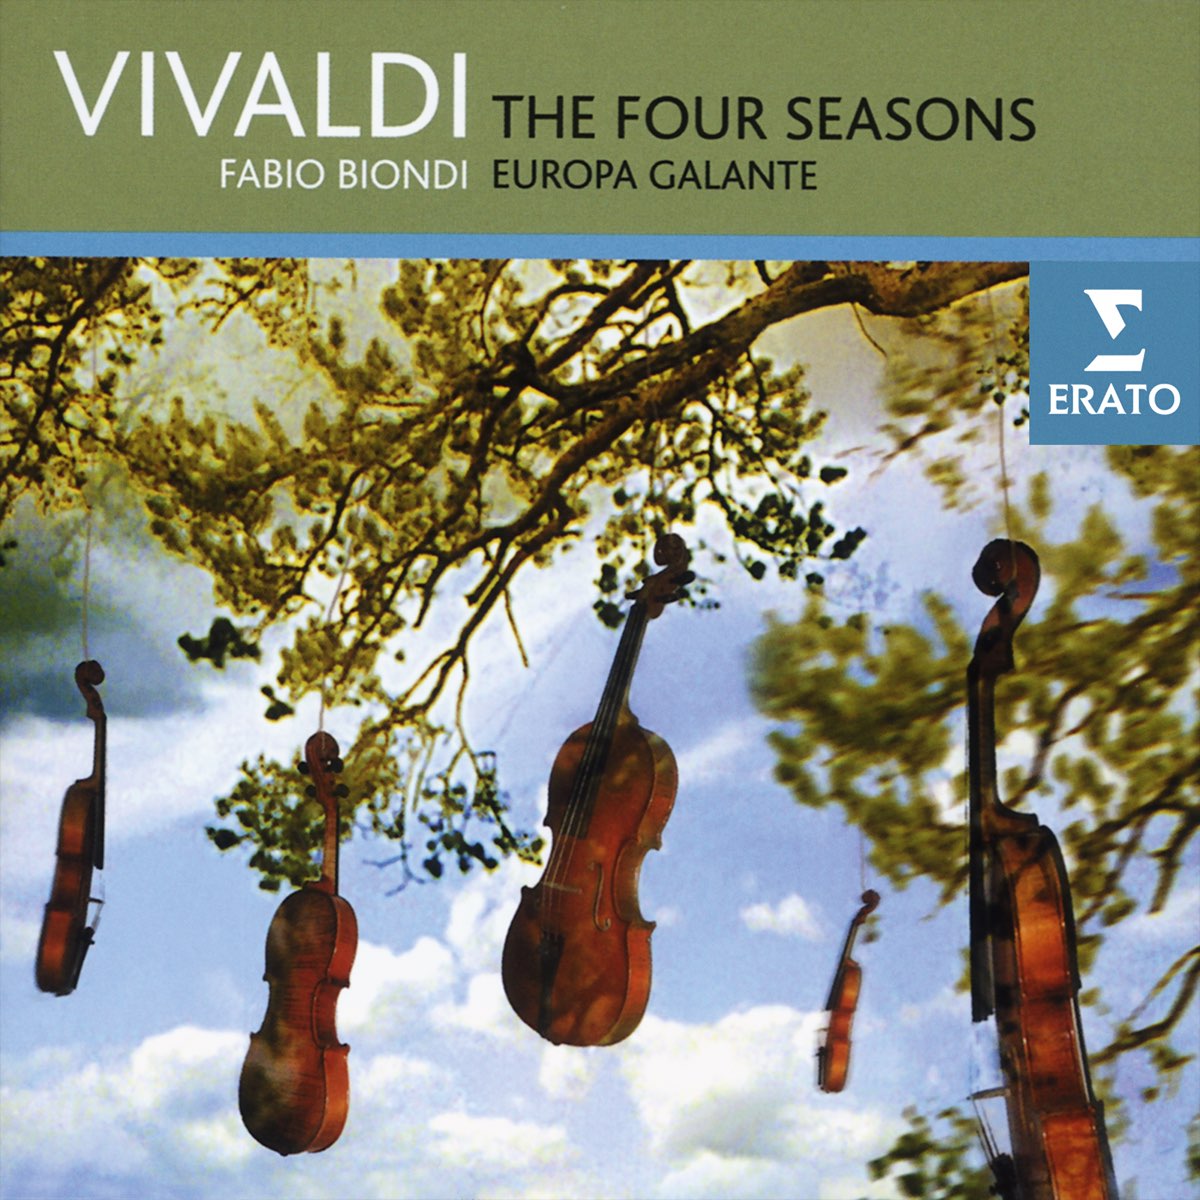 ‎Vivaldi: The Four Seasons by Fabio Biondi & Europa Galante on Apple Music